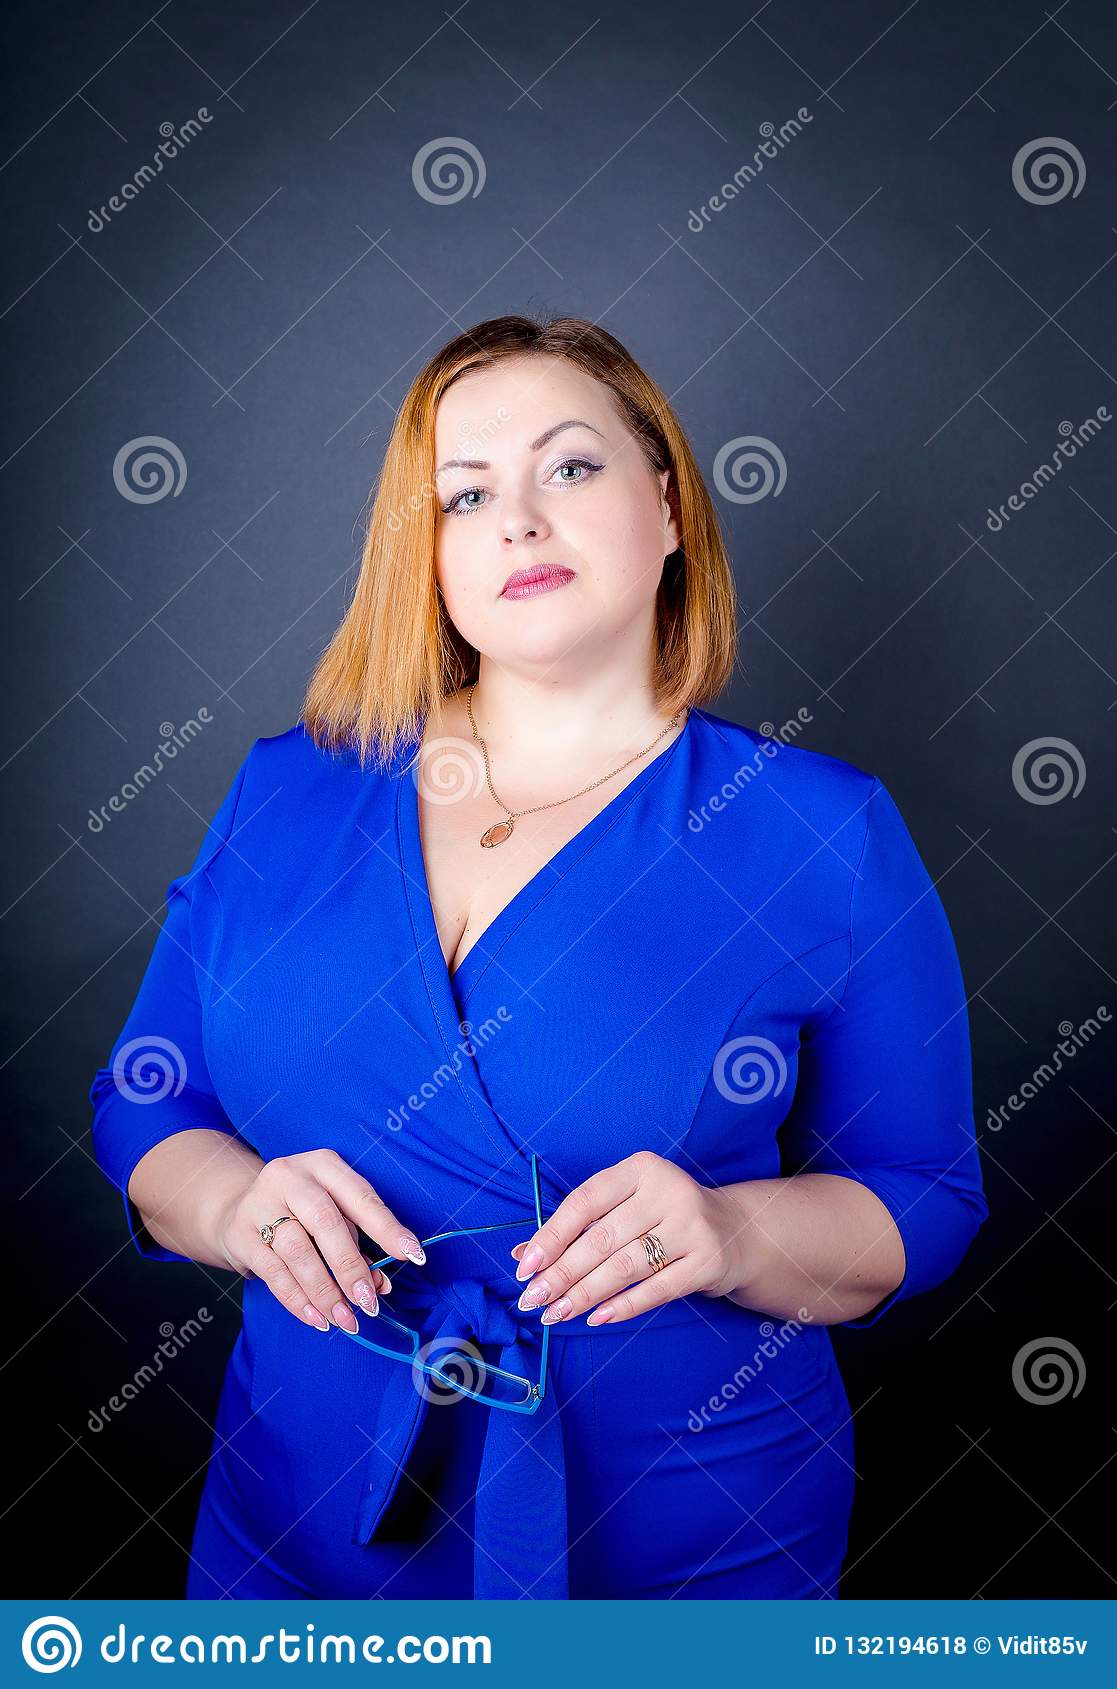 Beautiful Chubby Girl In Blue Elegant Dress On A Black Background ...